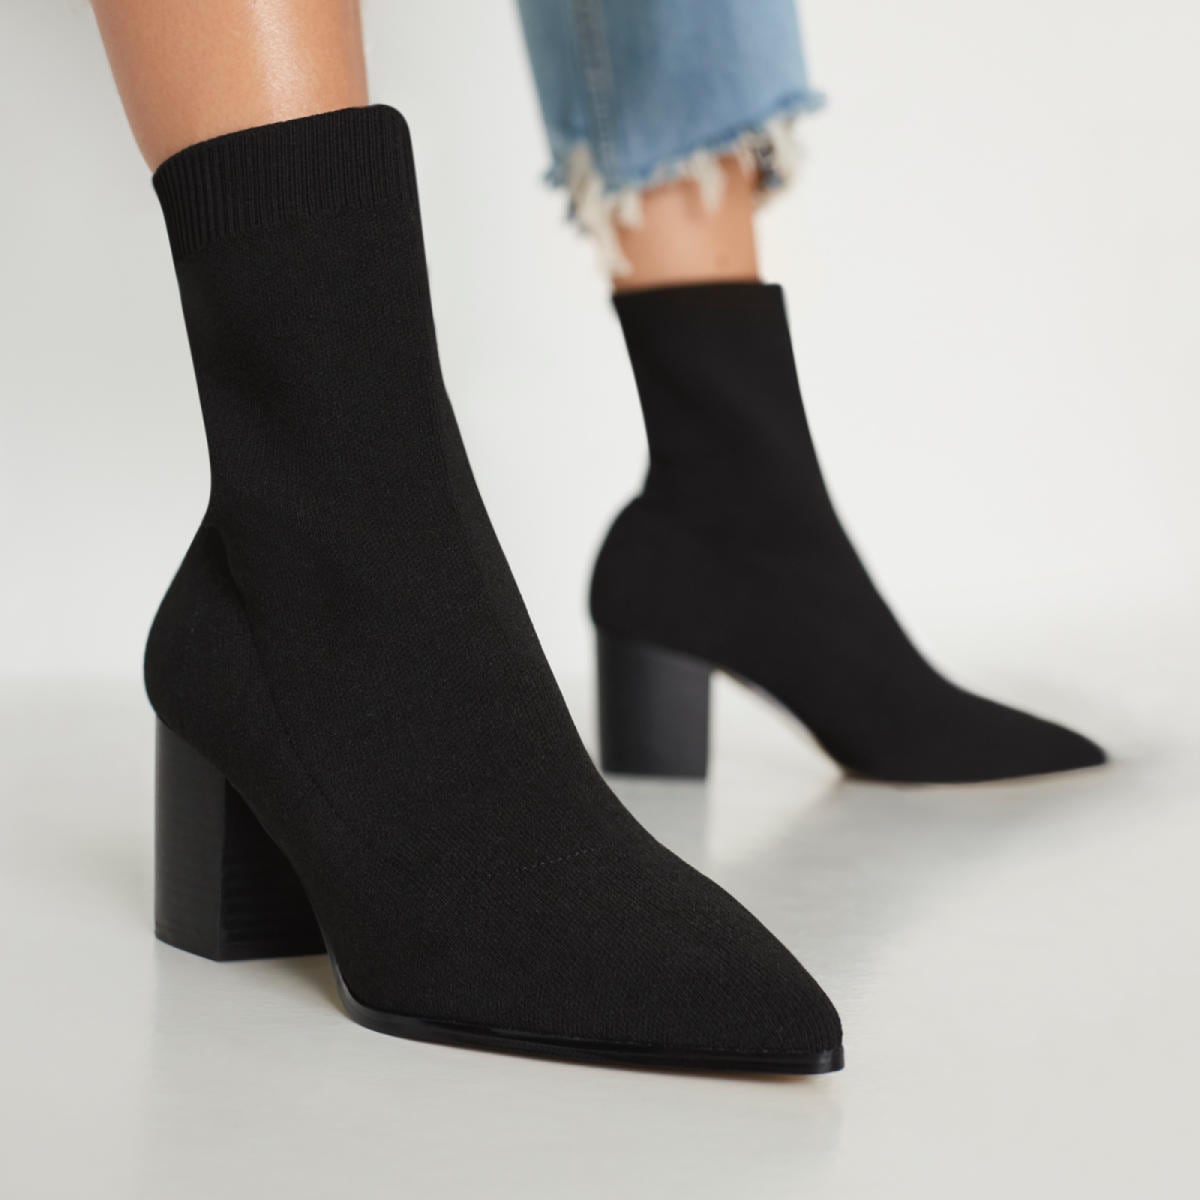 aldo black sock boots, OFF 79%,Free 